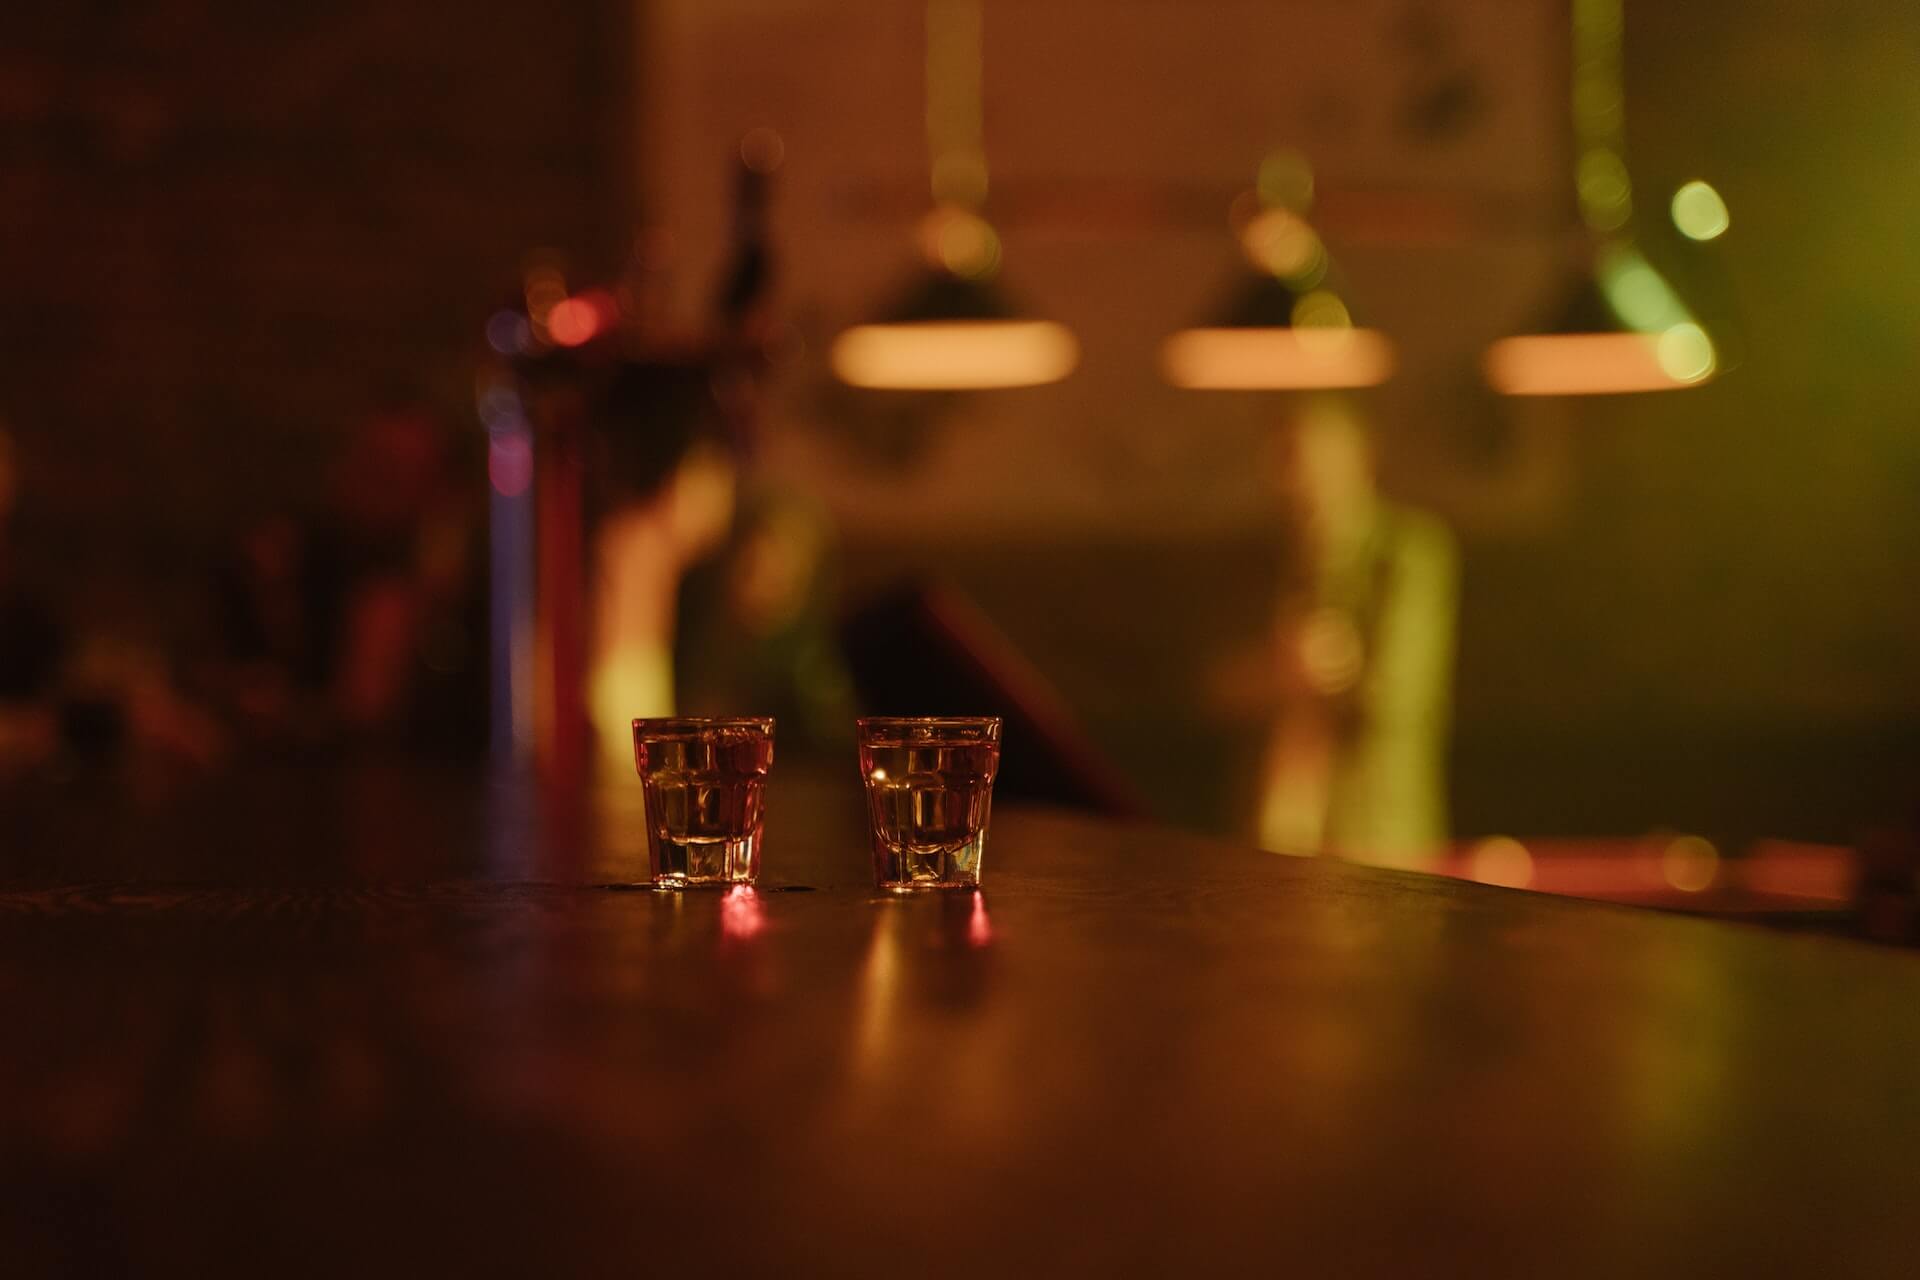 Two full shot glasses on a bar